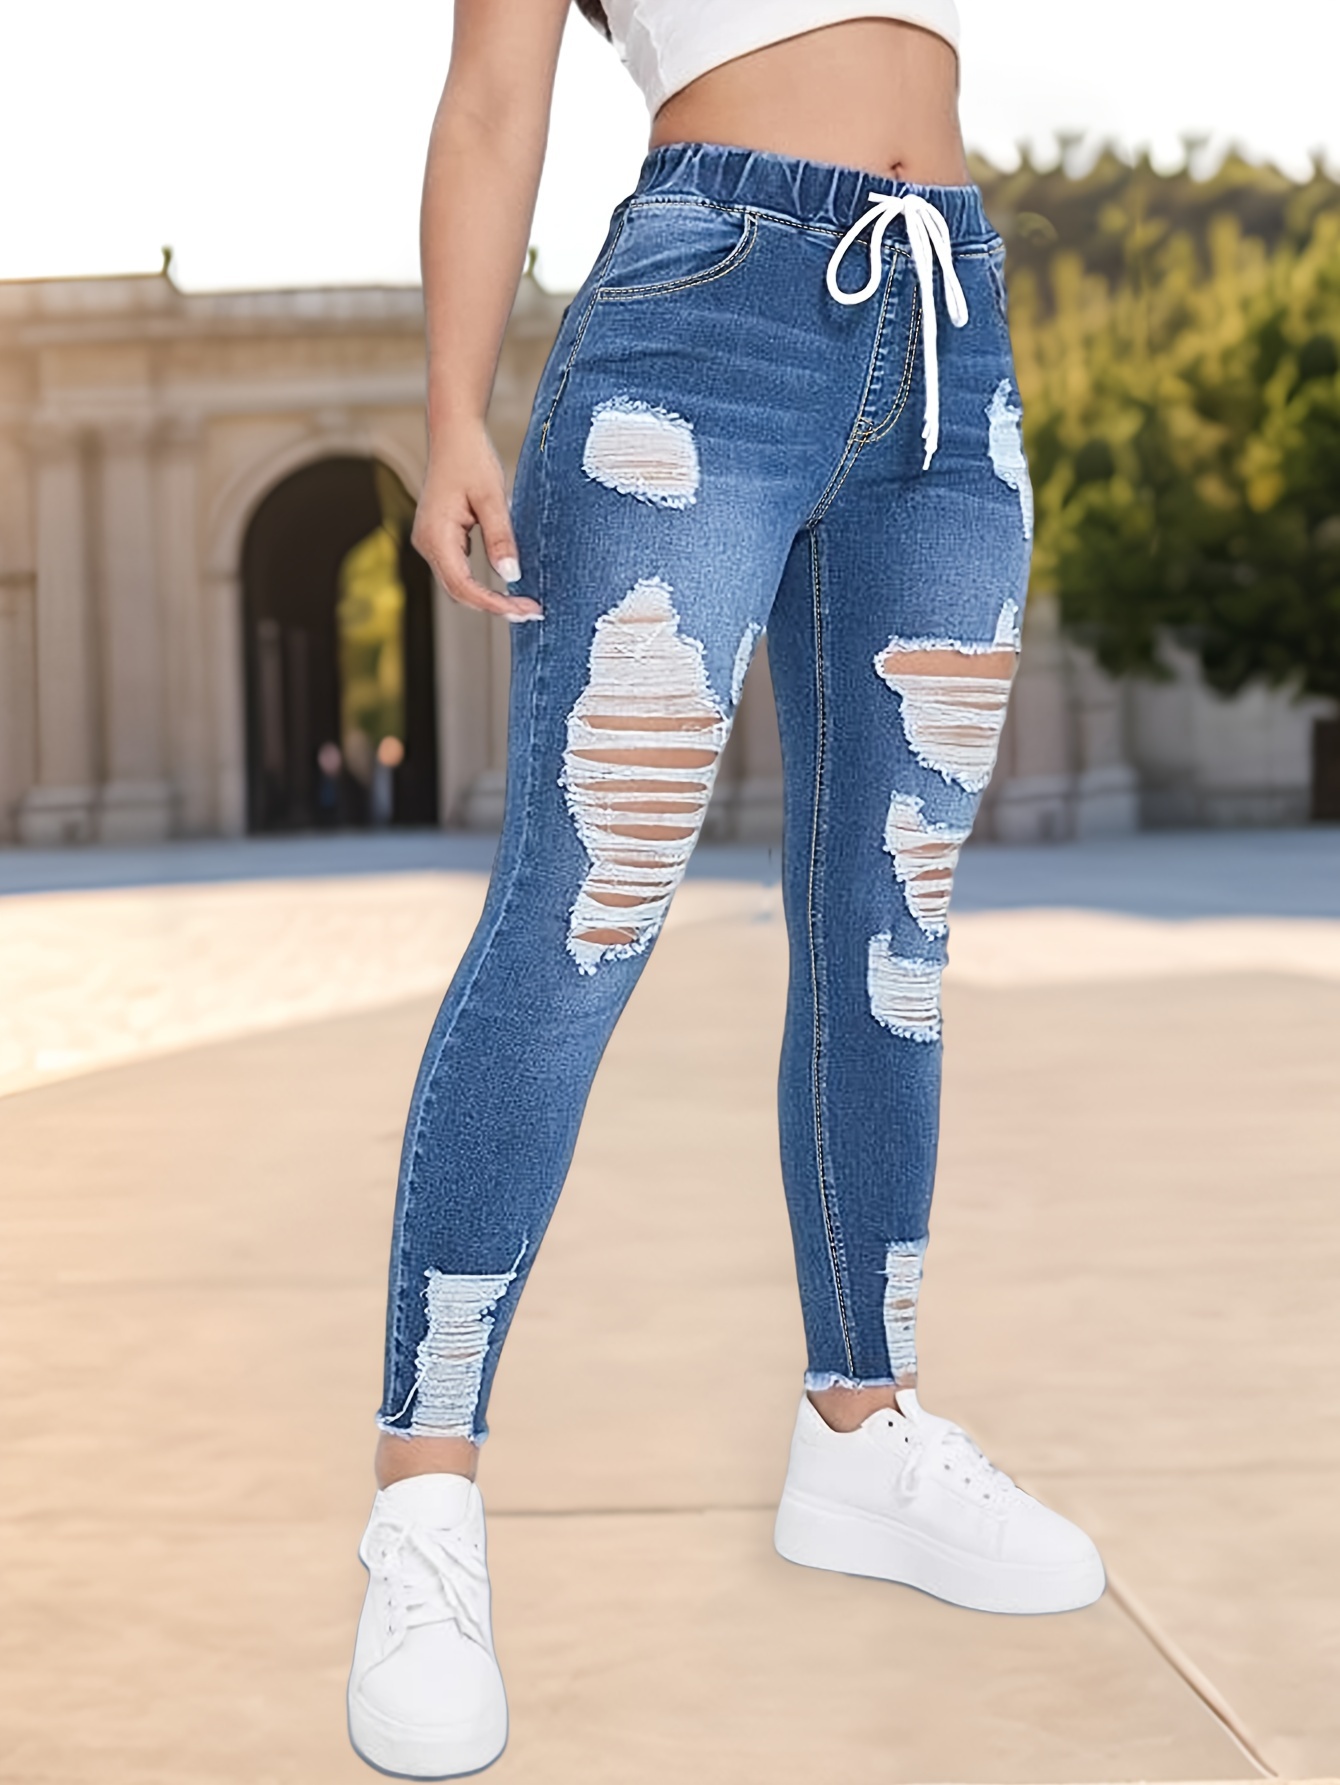 Pantalon mezclilla de mujer / Women's Jeans strech